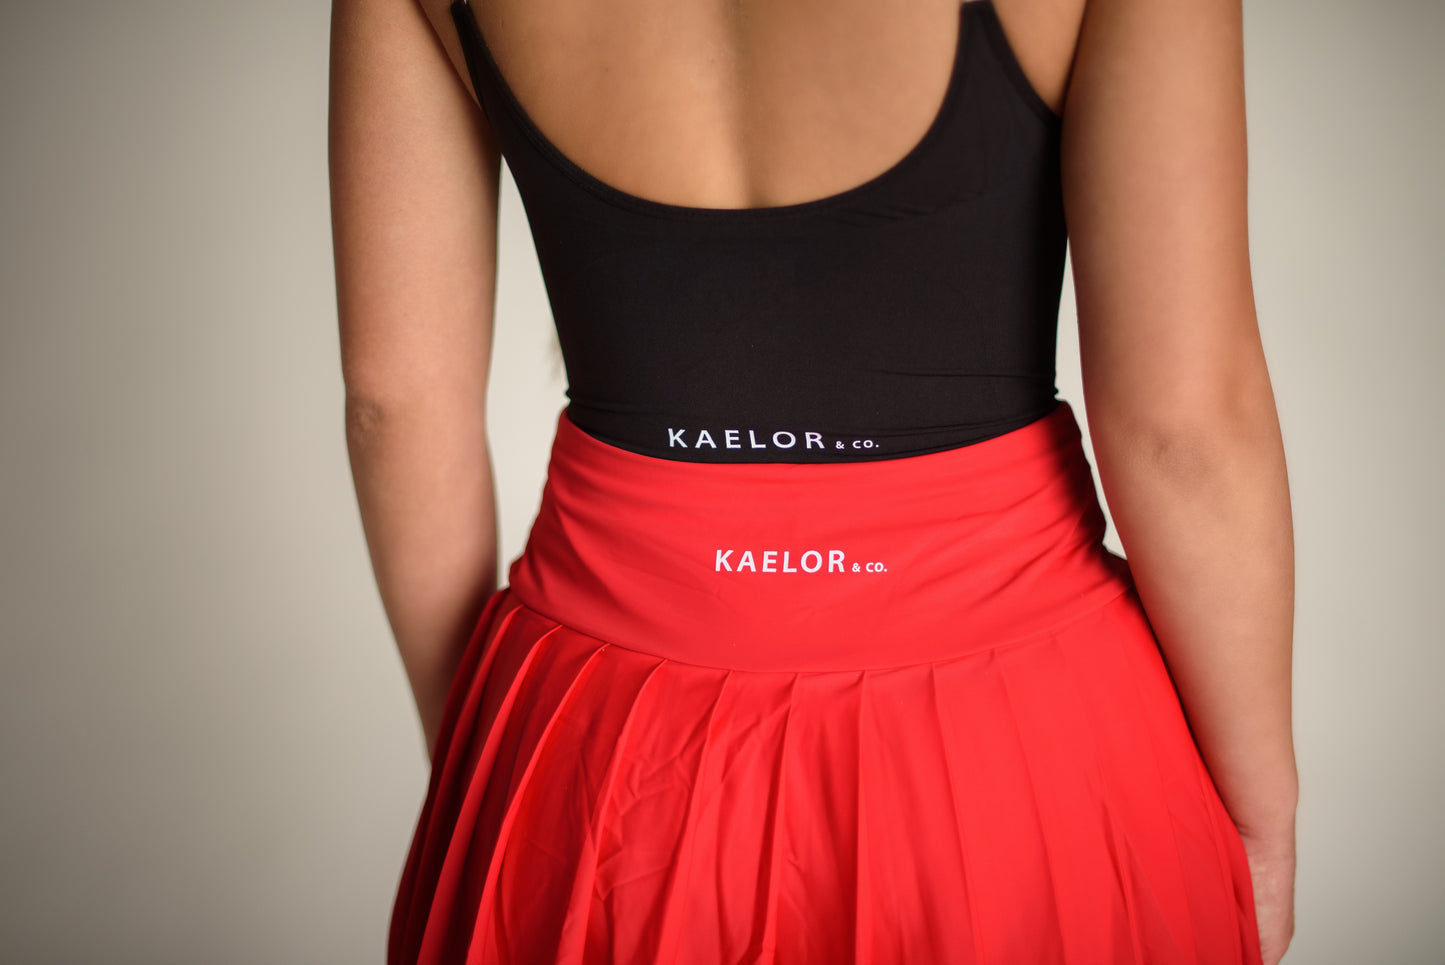 The Kaelor Pleated Skirt